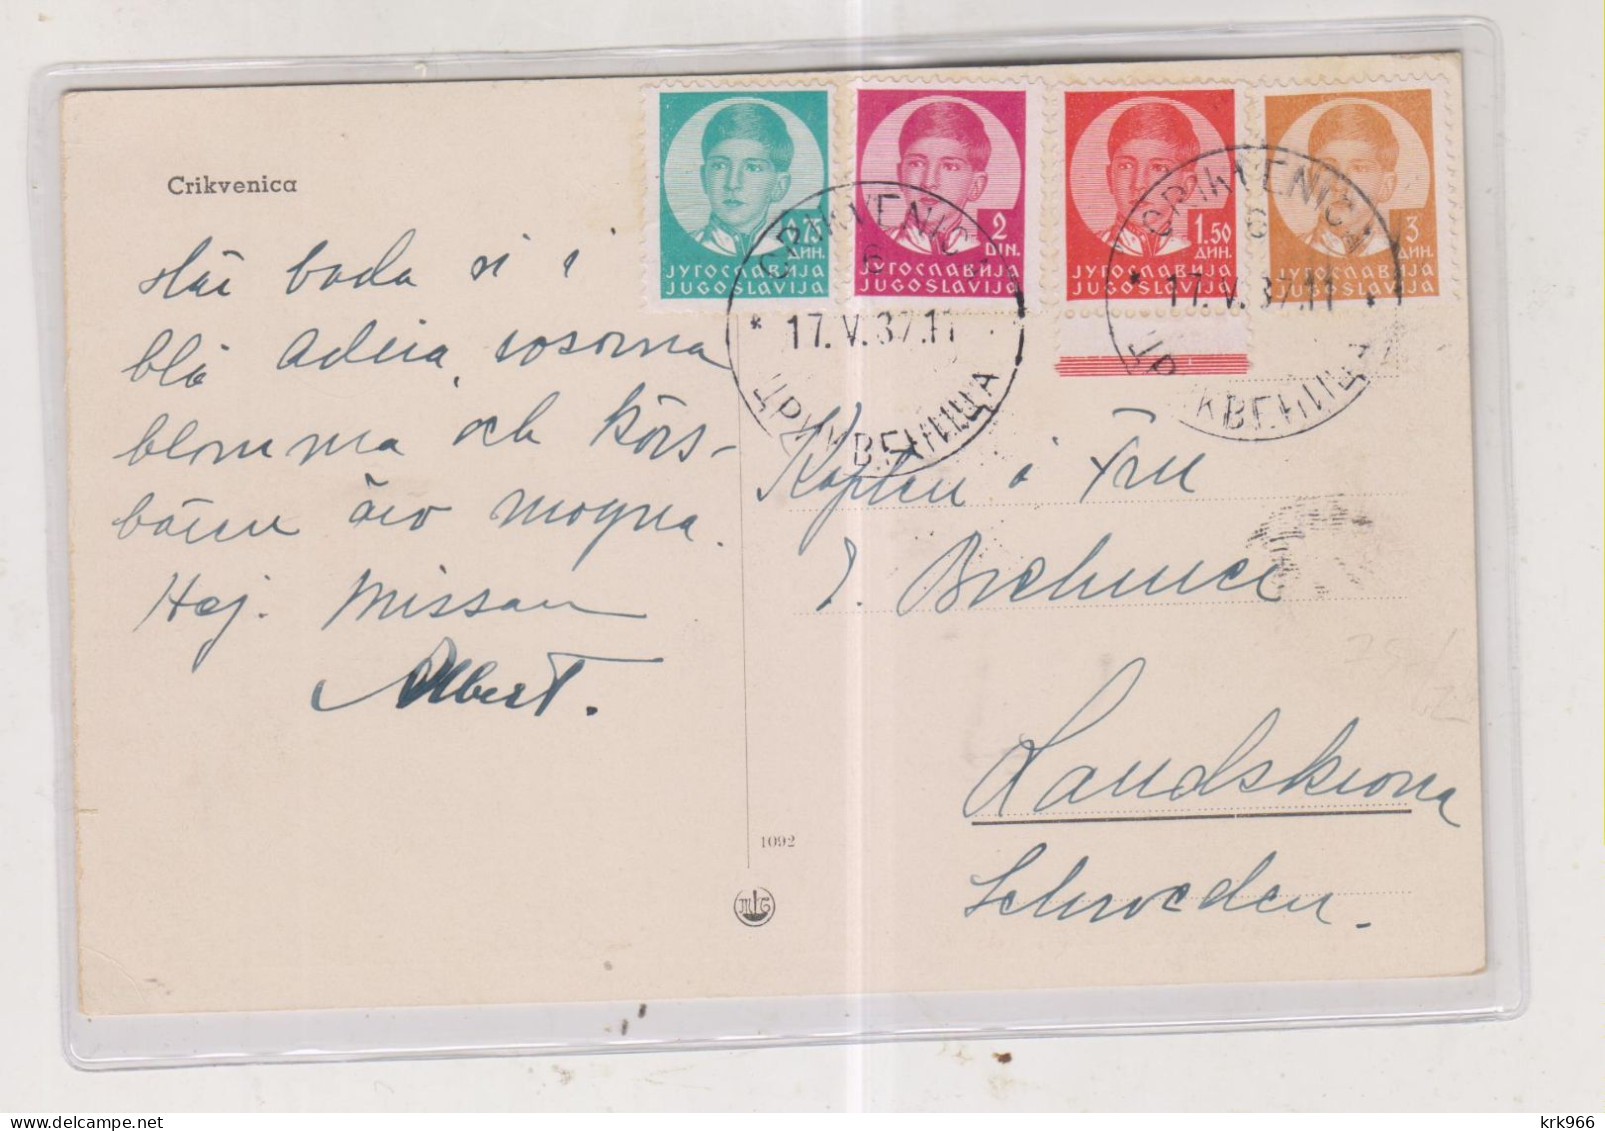 YUGOSLAVIA,1937 CRIKVENICA Nice Postcard To Sweden - Covers & Documents